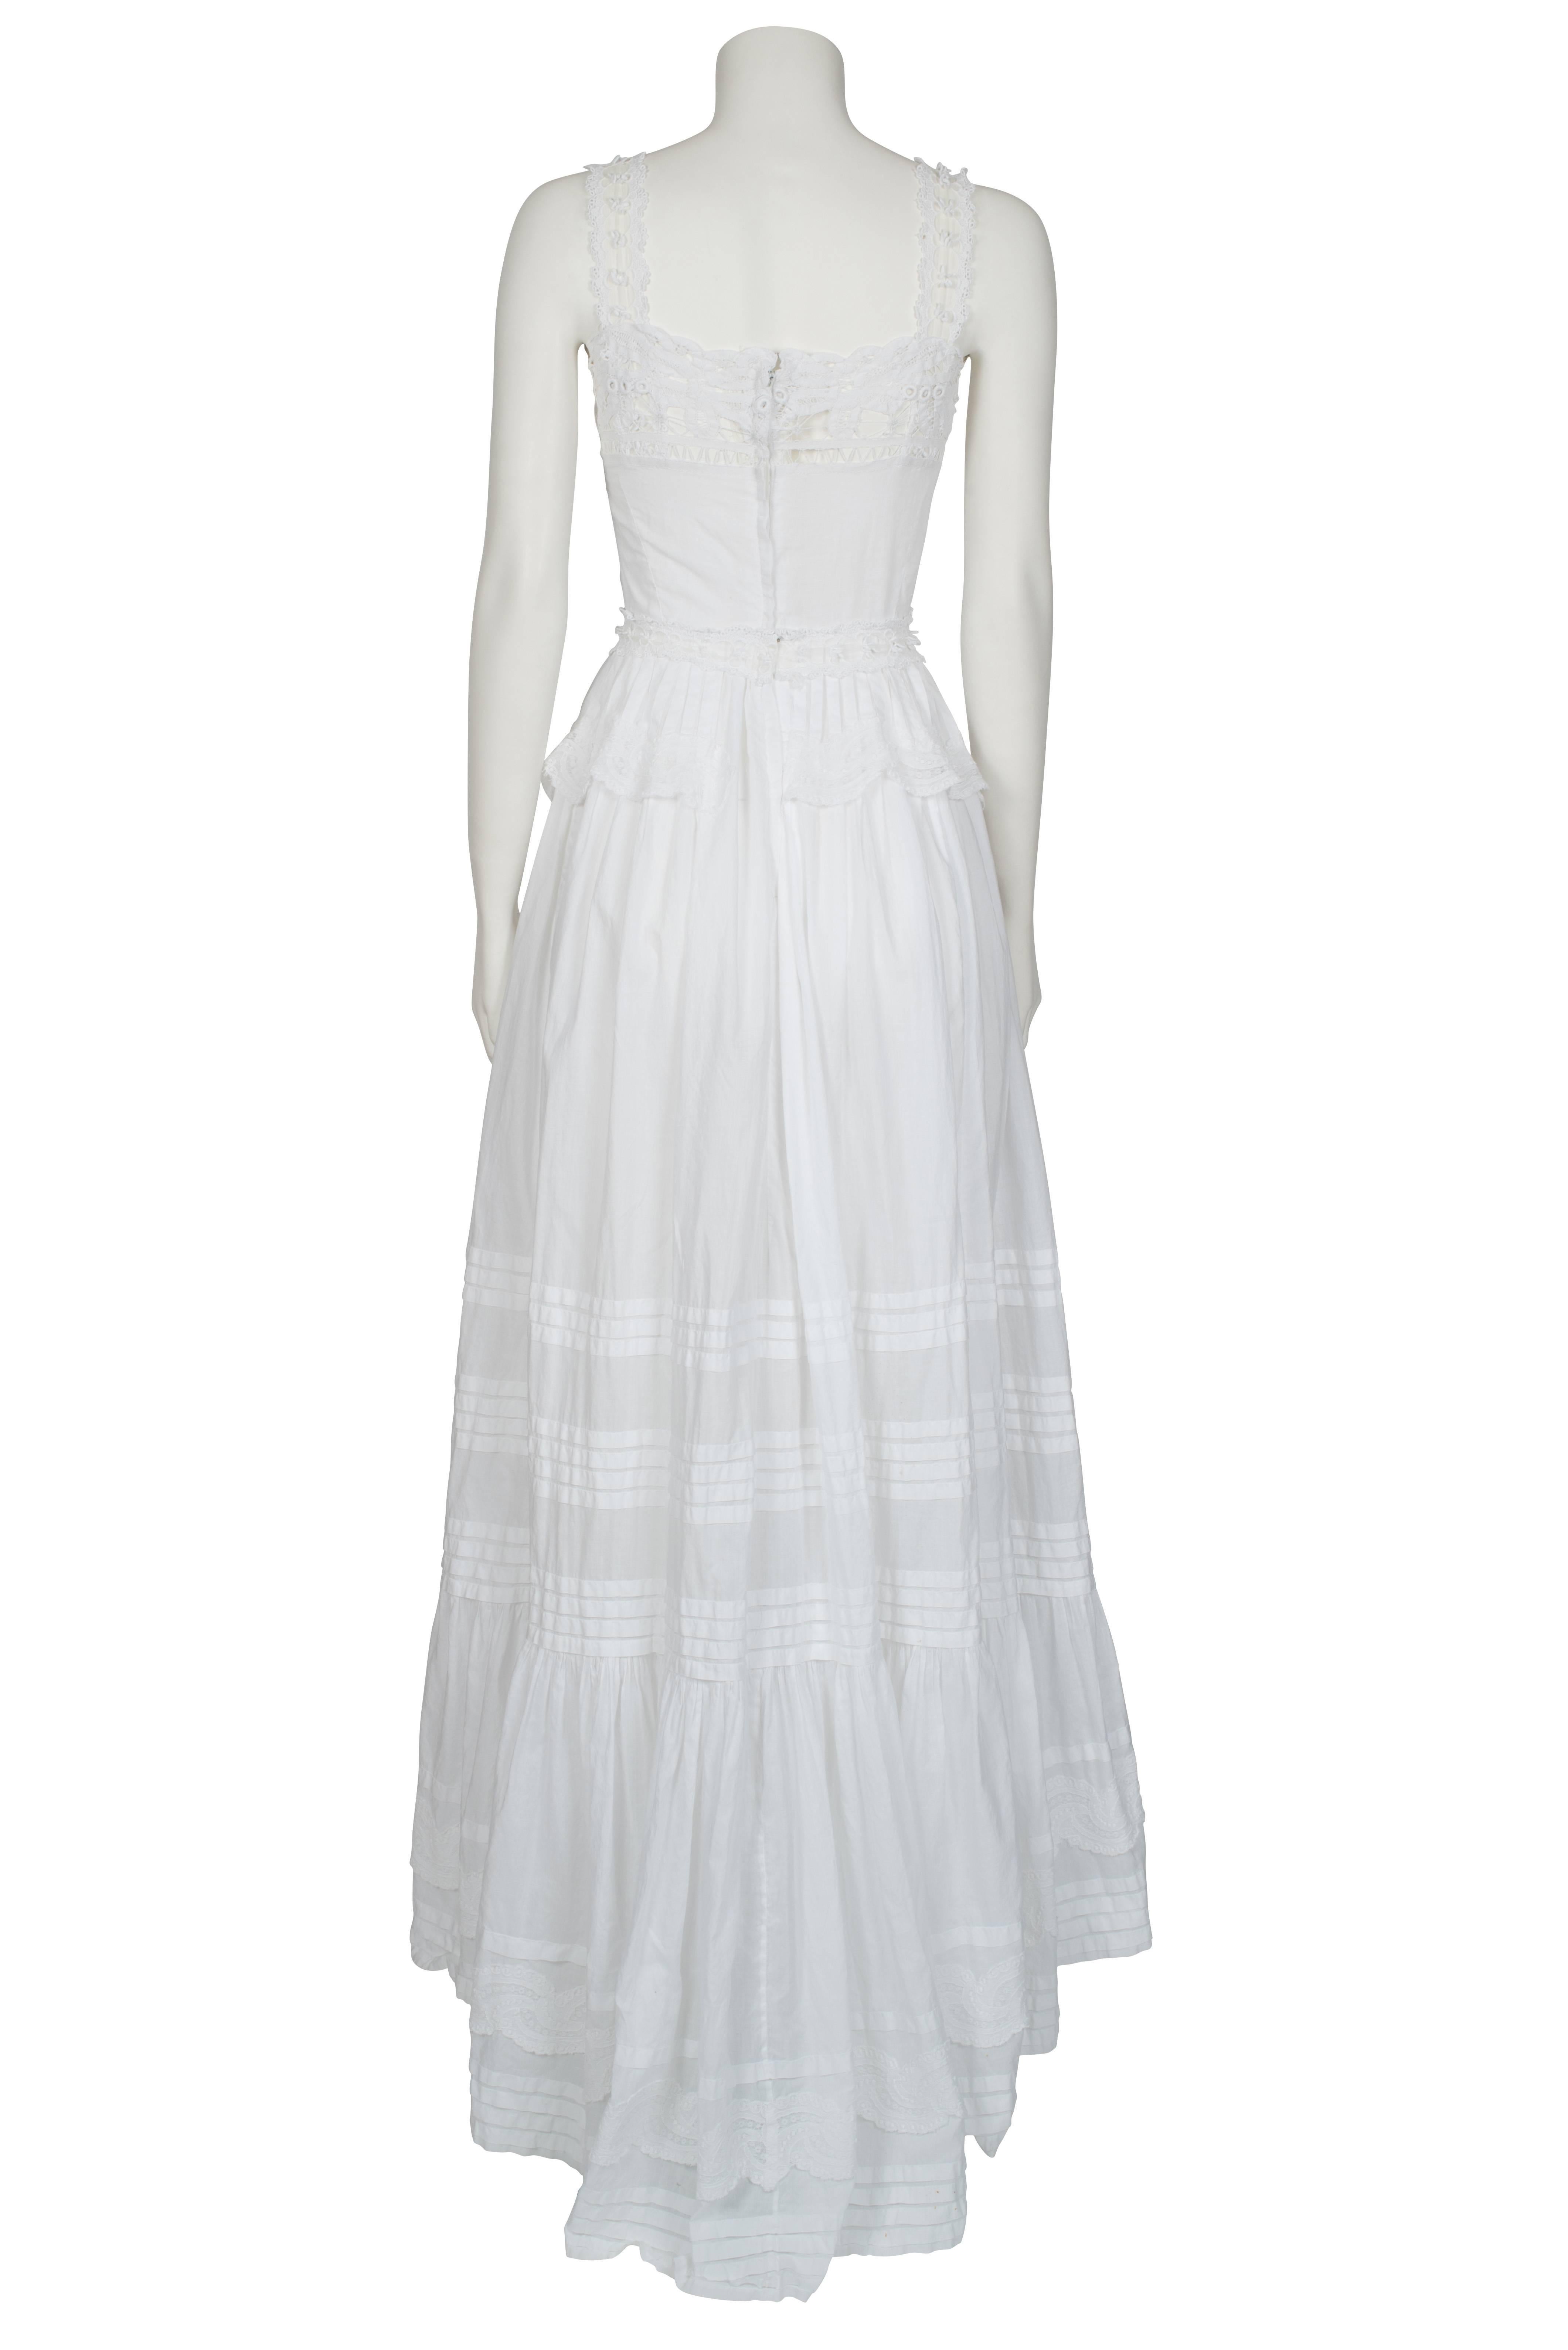 Women's Theodora van Runkle Designed 'Victorian Style' Dress ca 1970 For Sale